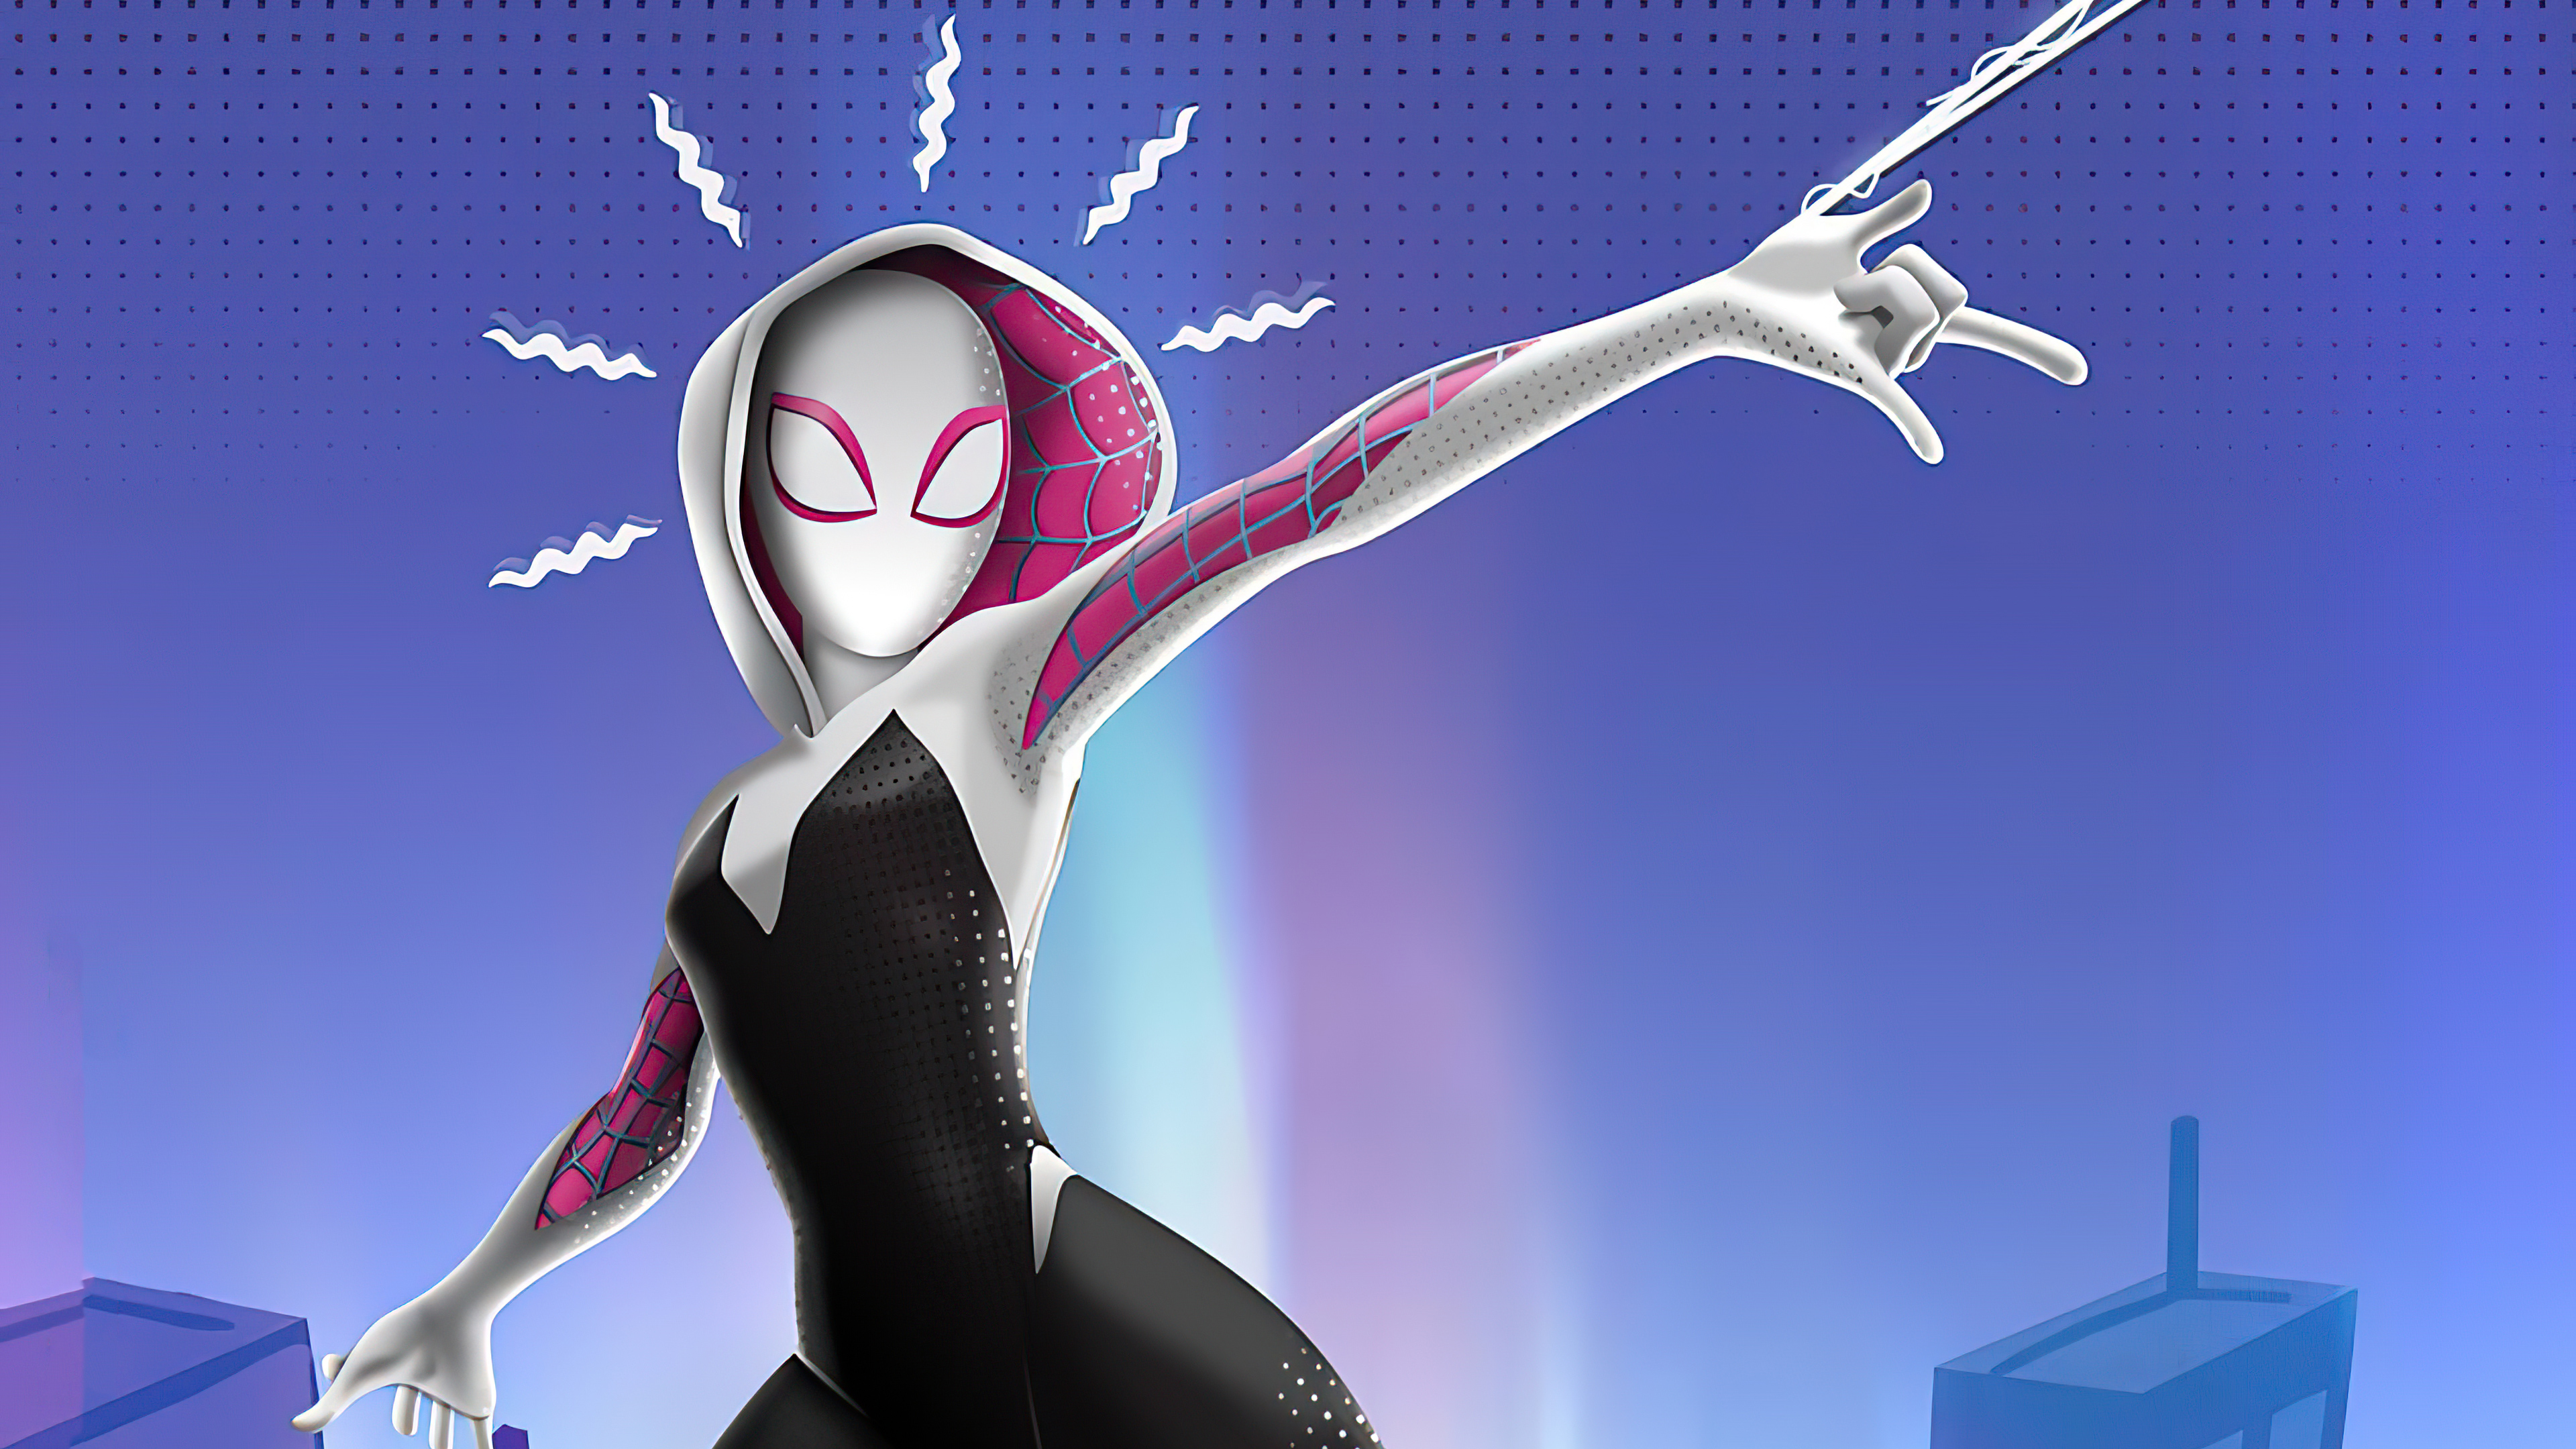 Spider-Gwen 4k Ultra HD Wallpaper by Atharva Jumde